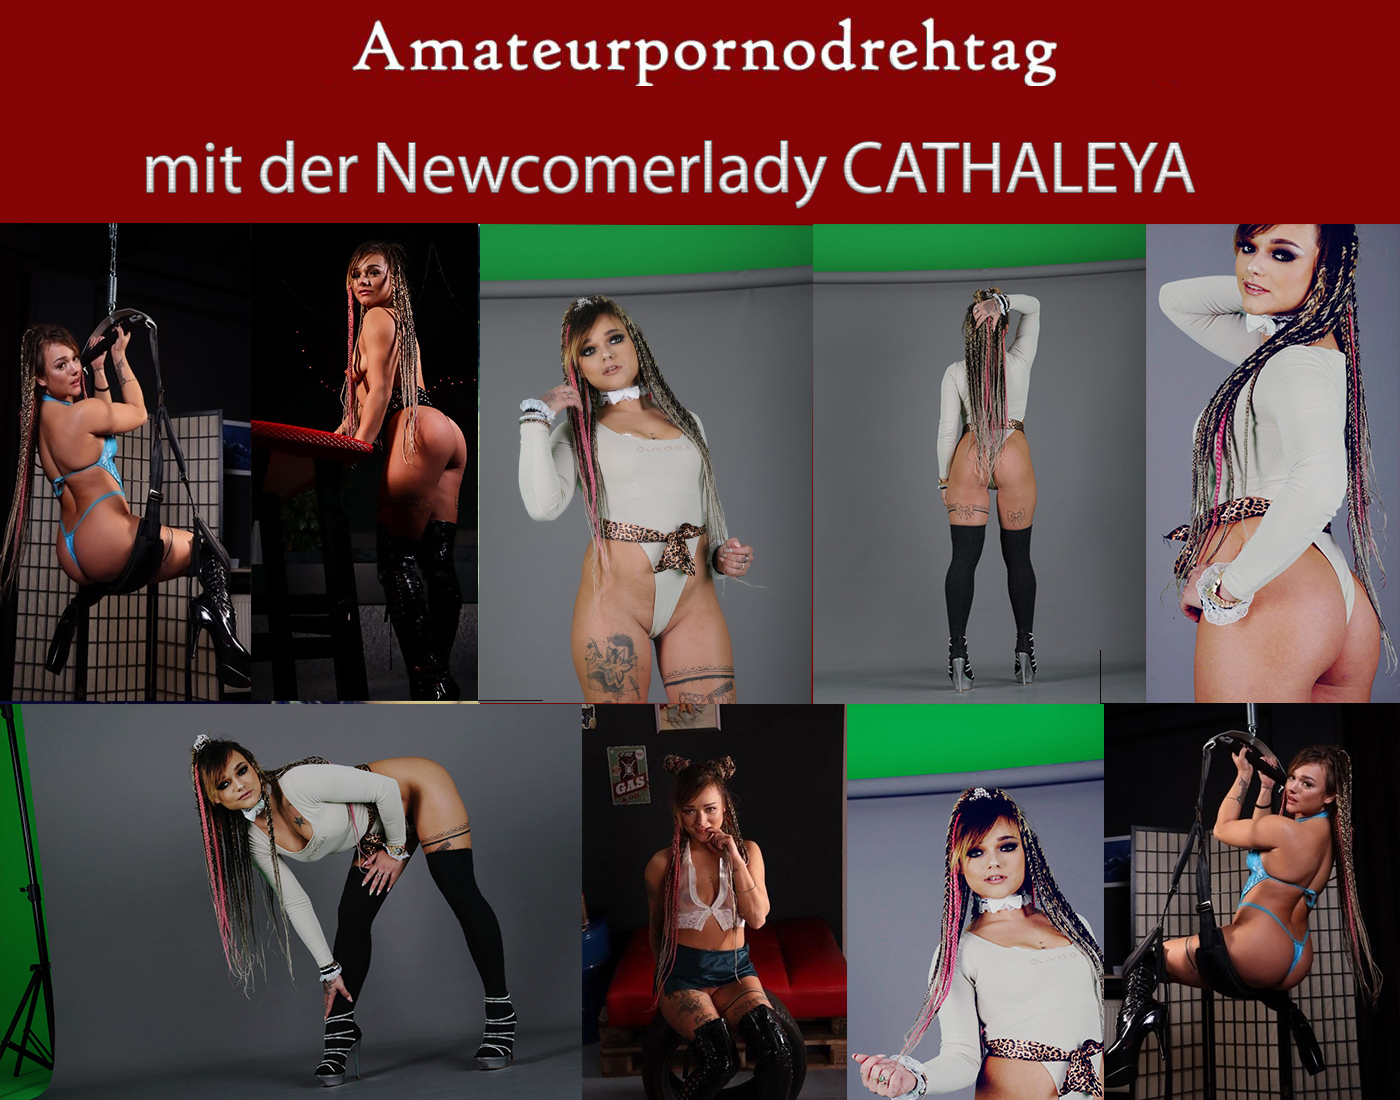 https://amateurporno-club.net/ac/bilder/Models/cathaleya/1400x1100.jpg